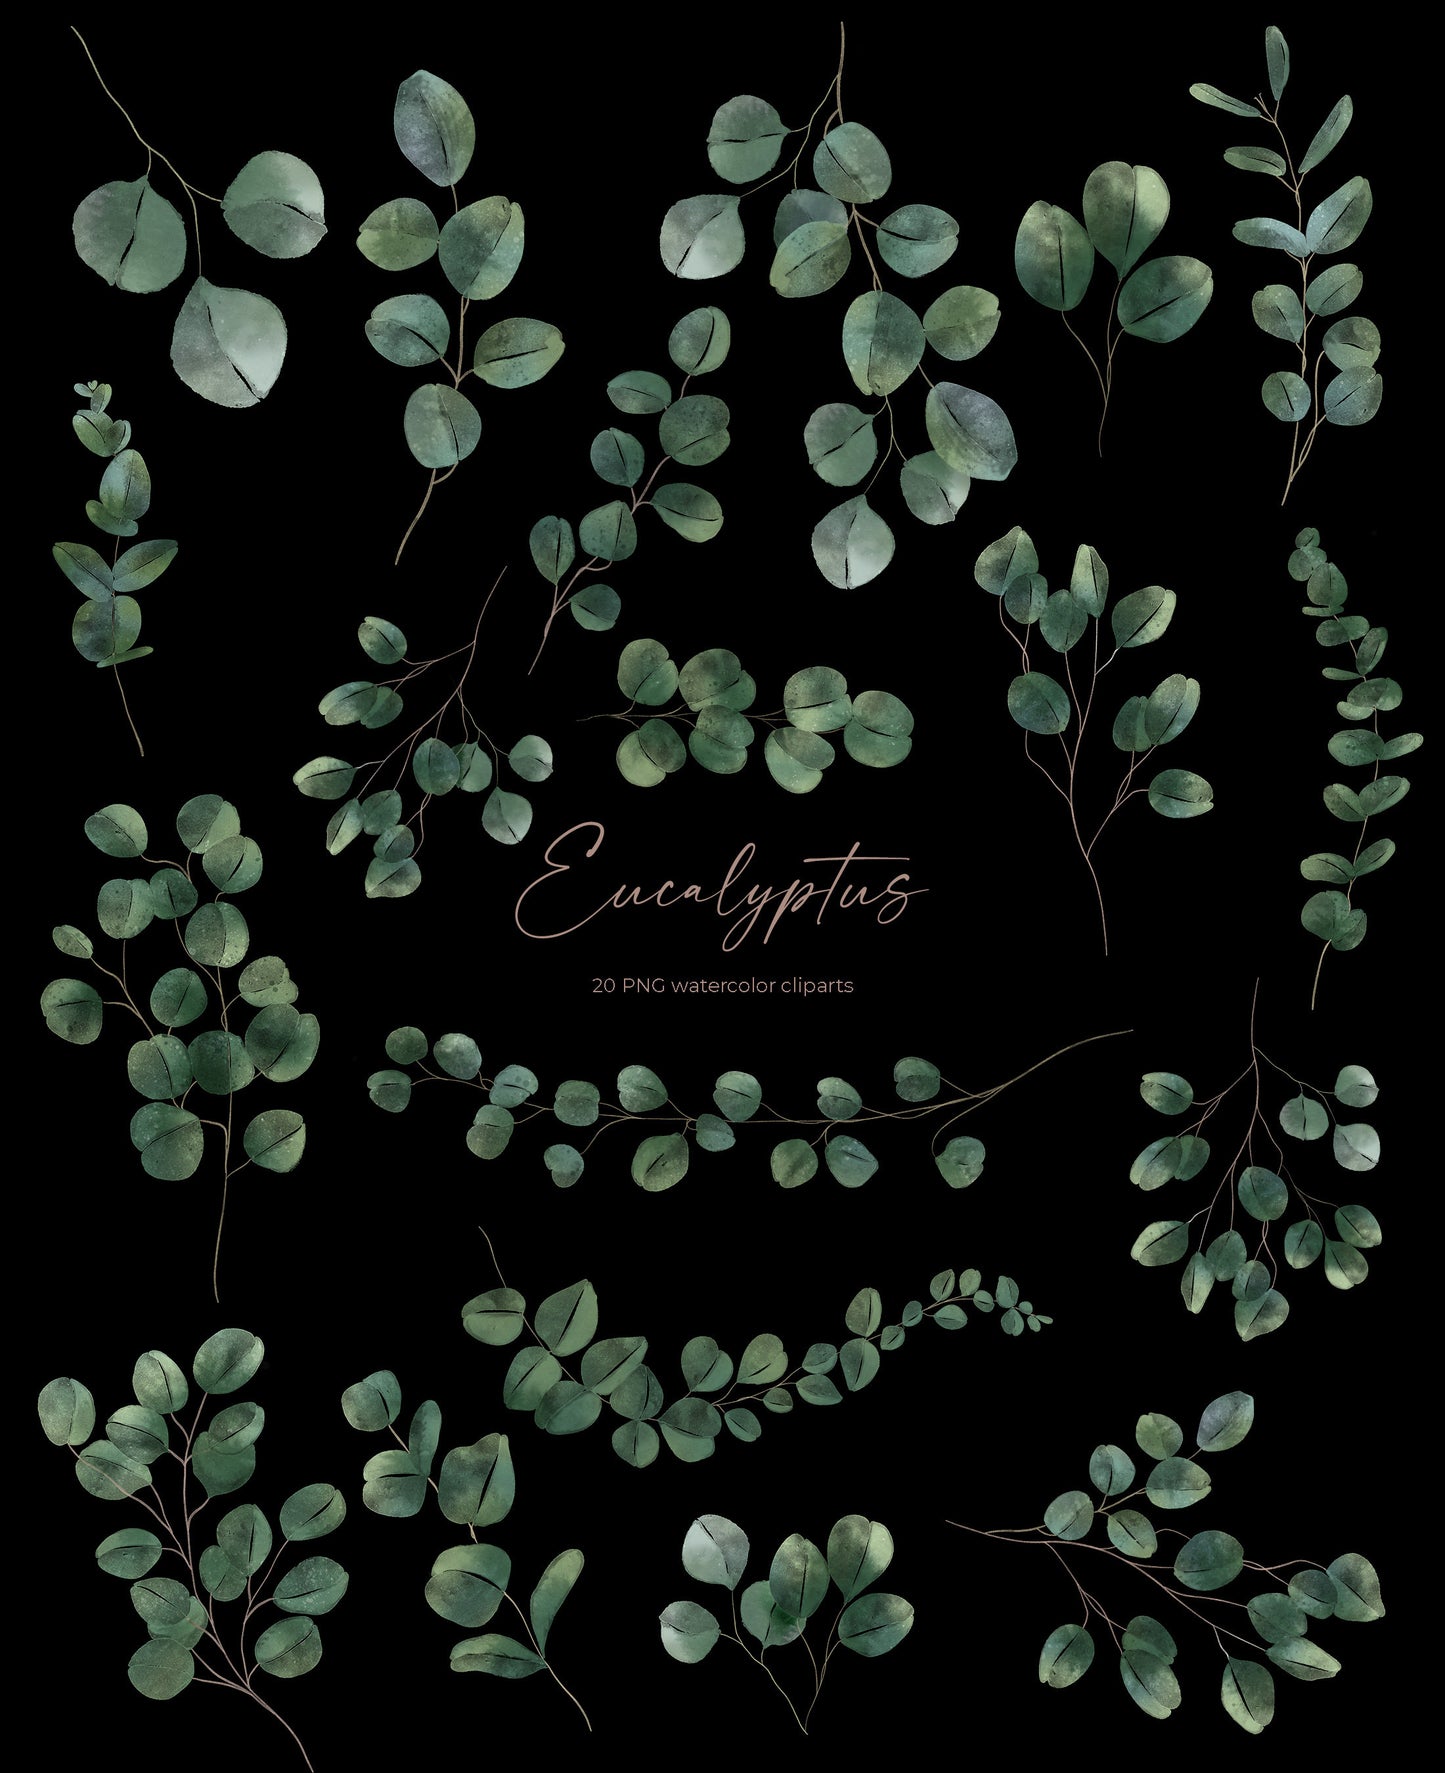 20 Eucalyptus Watercolor Cliparts